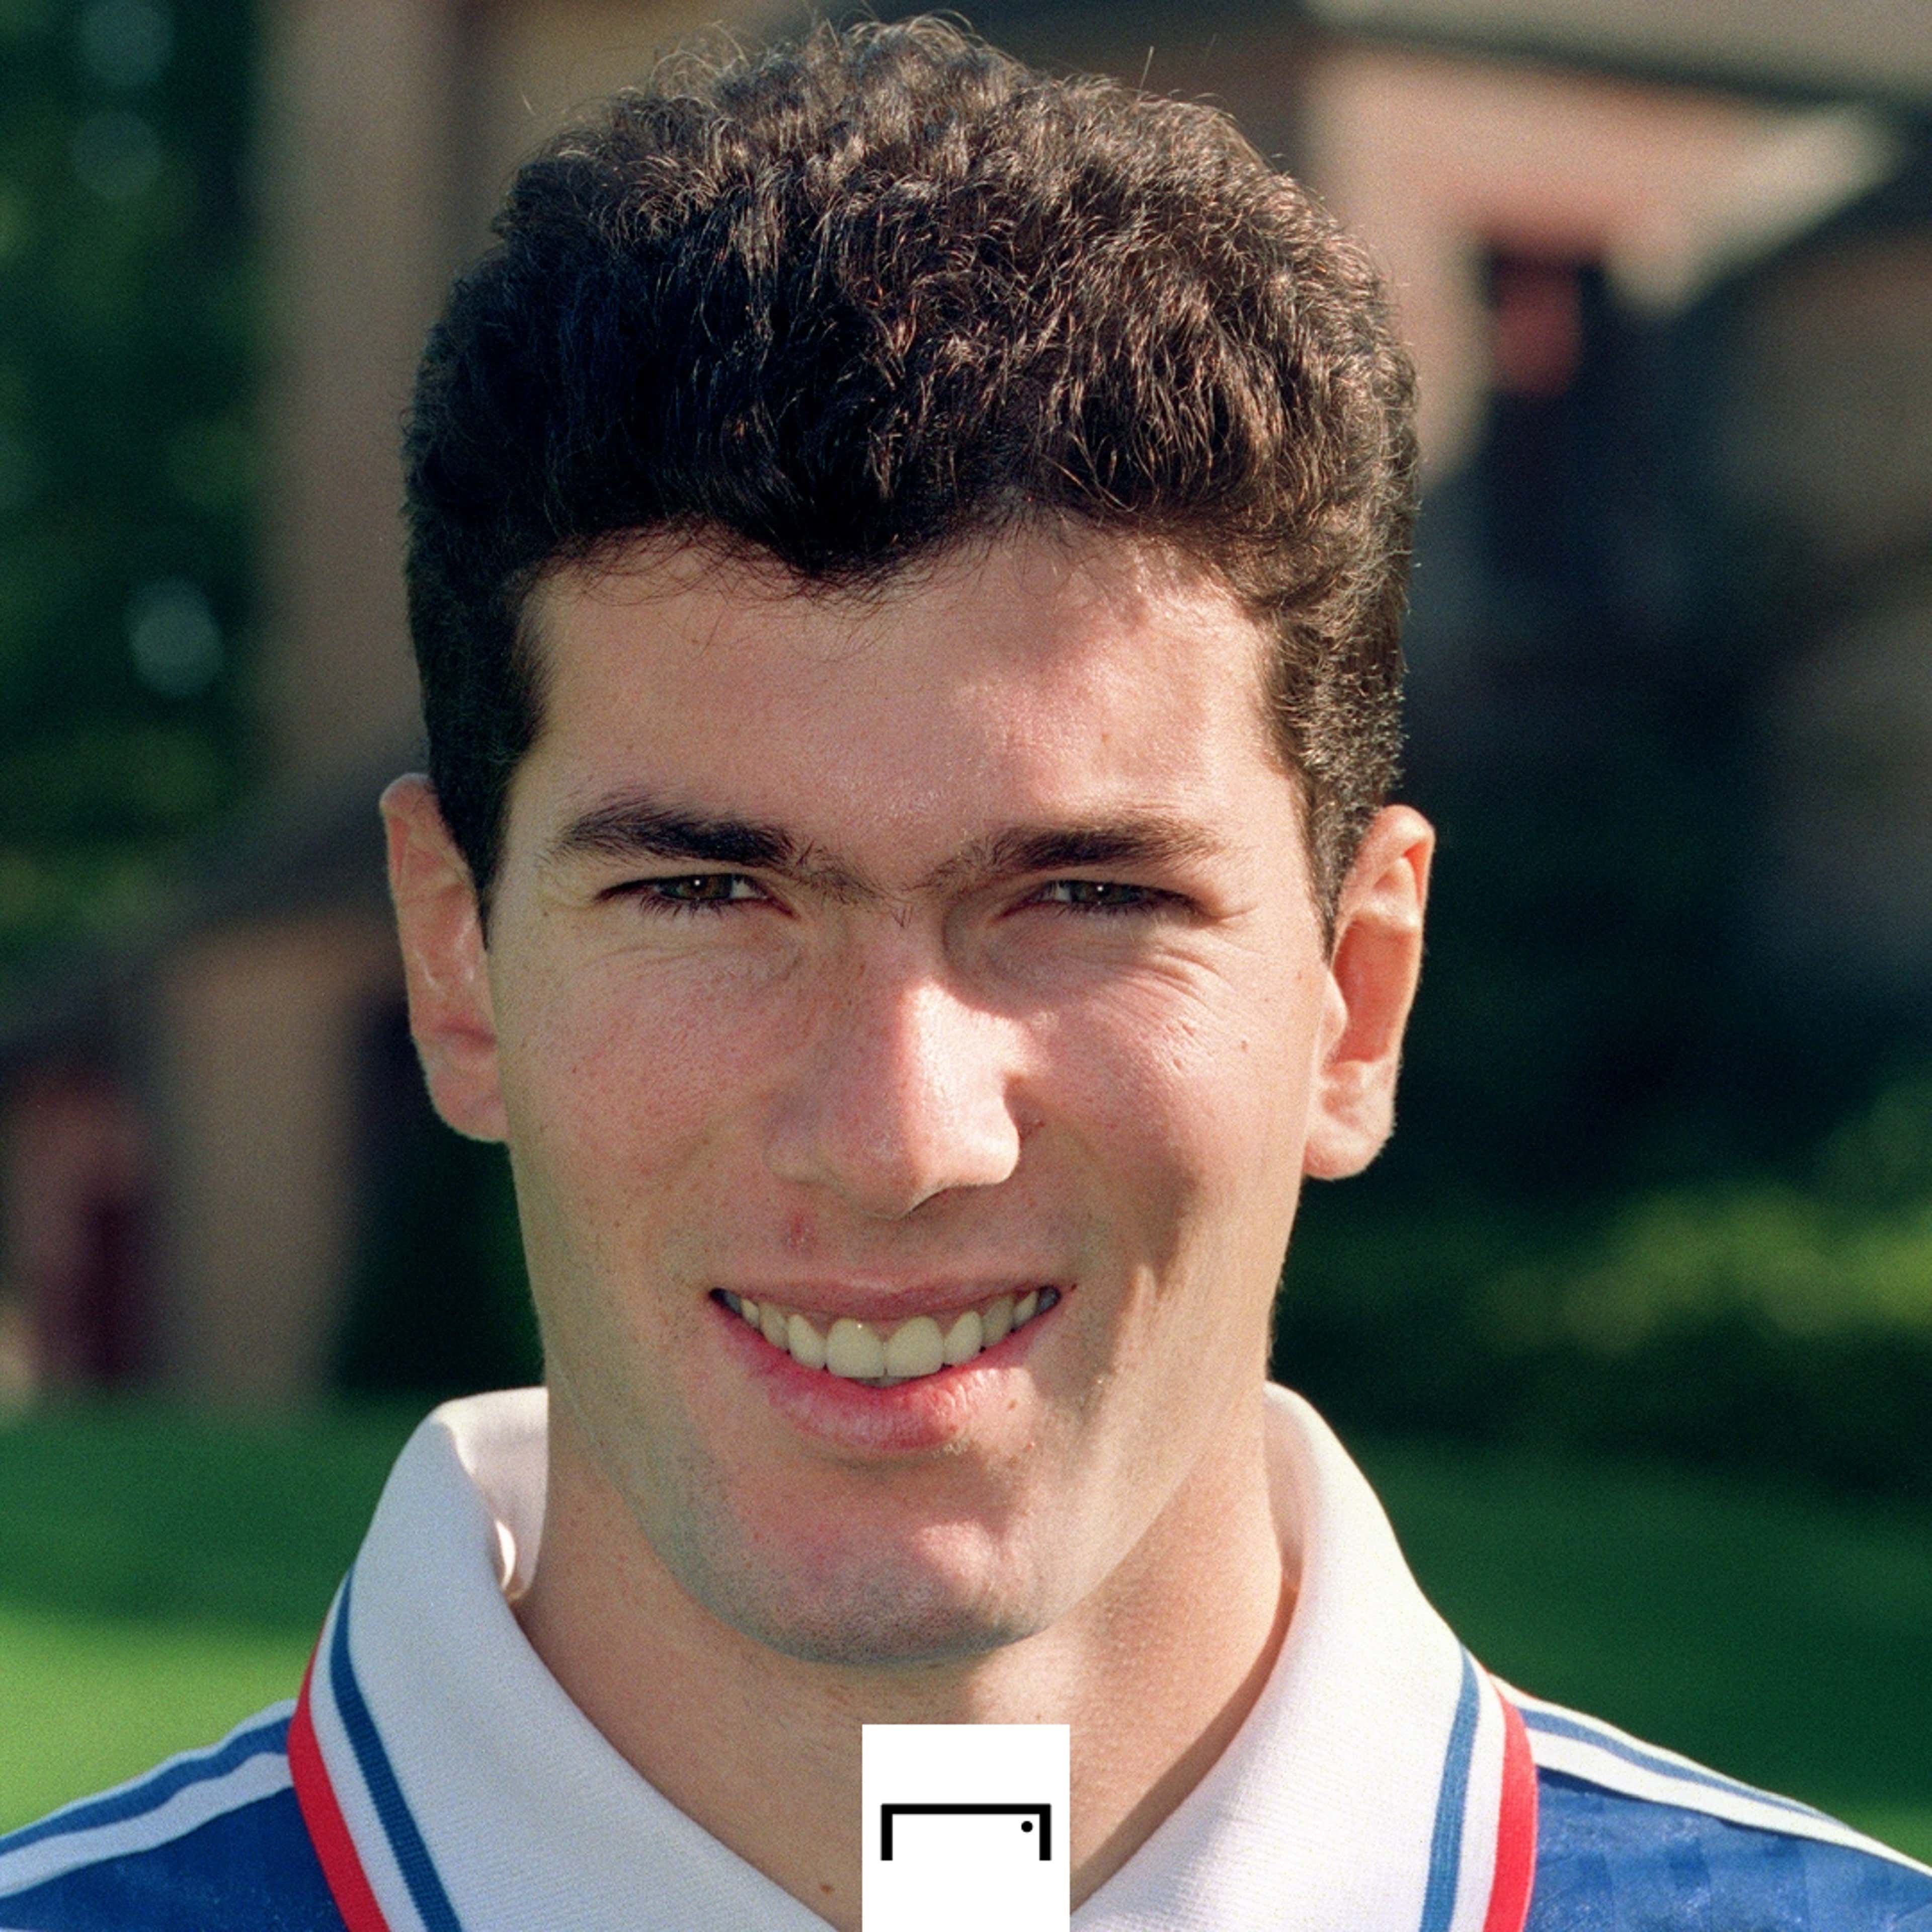 Zinedine Zidane Euro 96 GFX